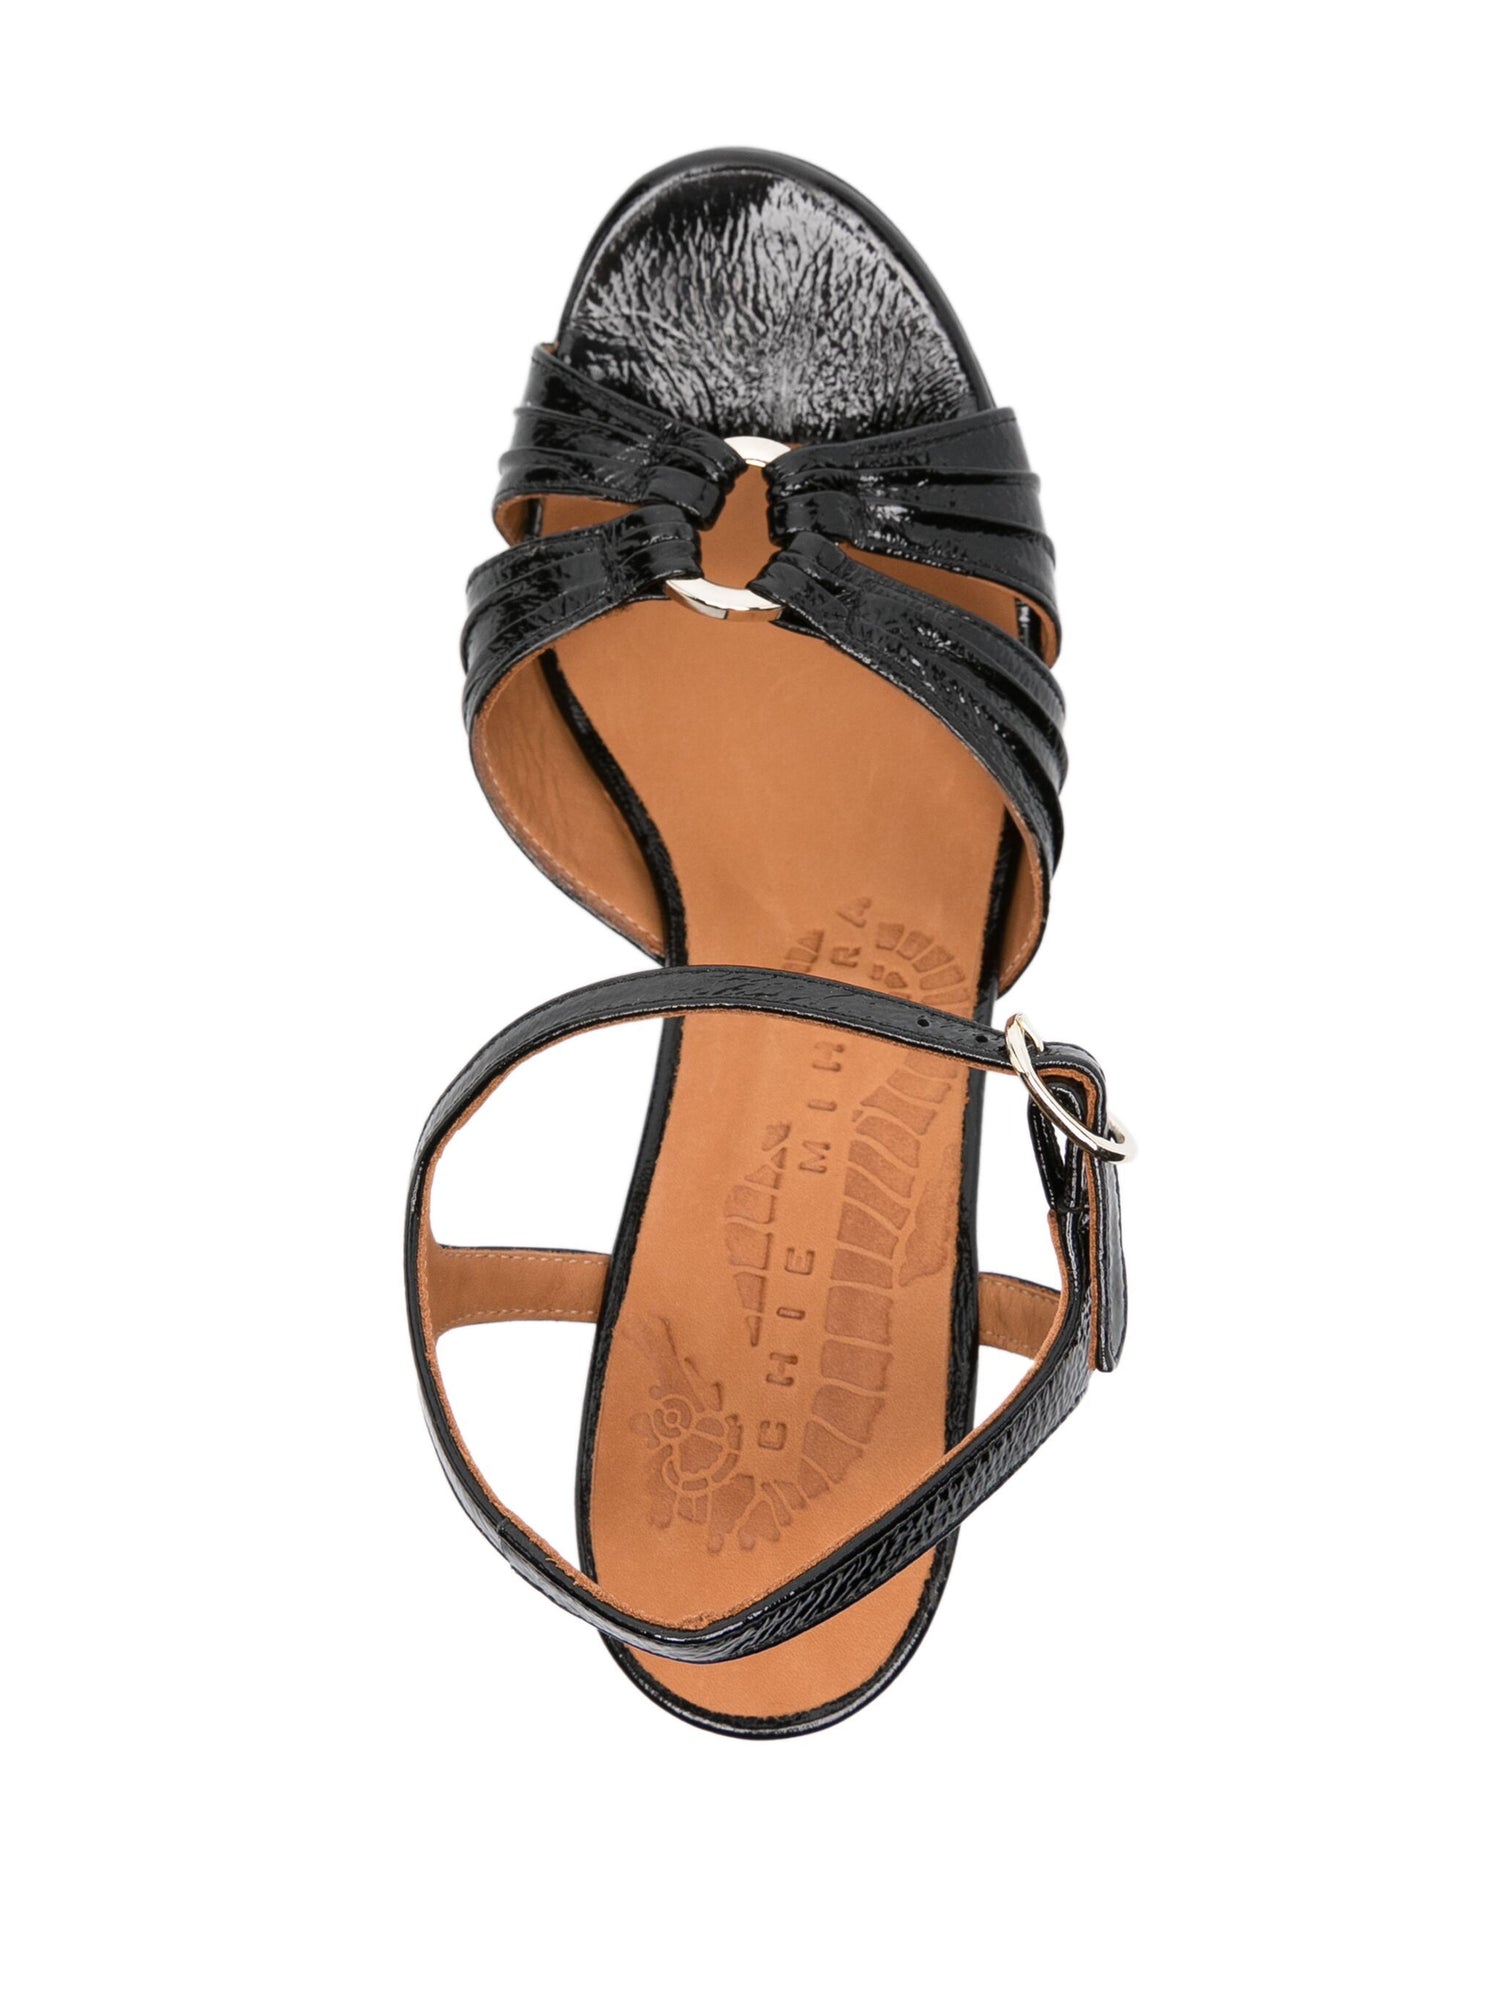 KELOCA sandals, black